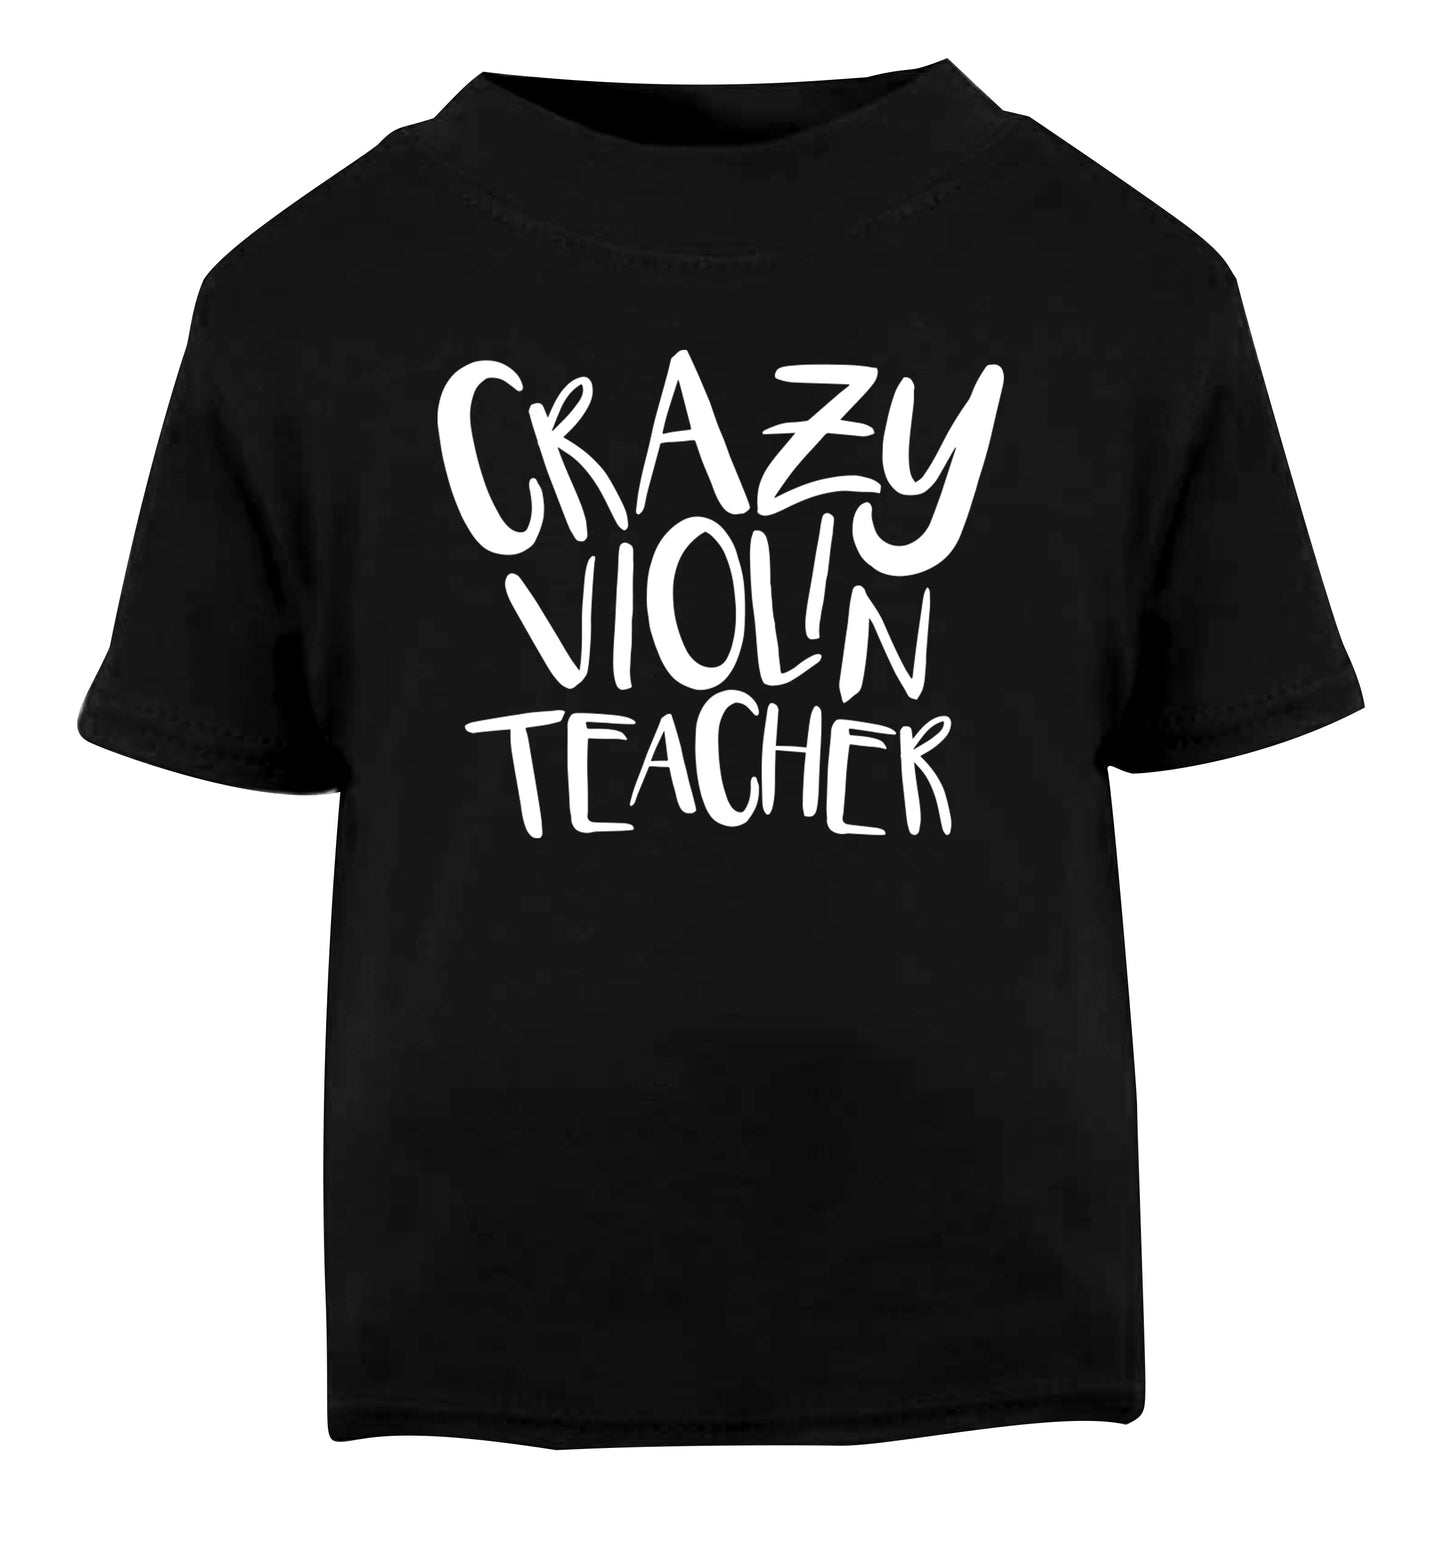 Crazy violin teacher Black Baby Toddler Tshirt 2 years